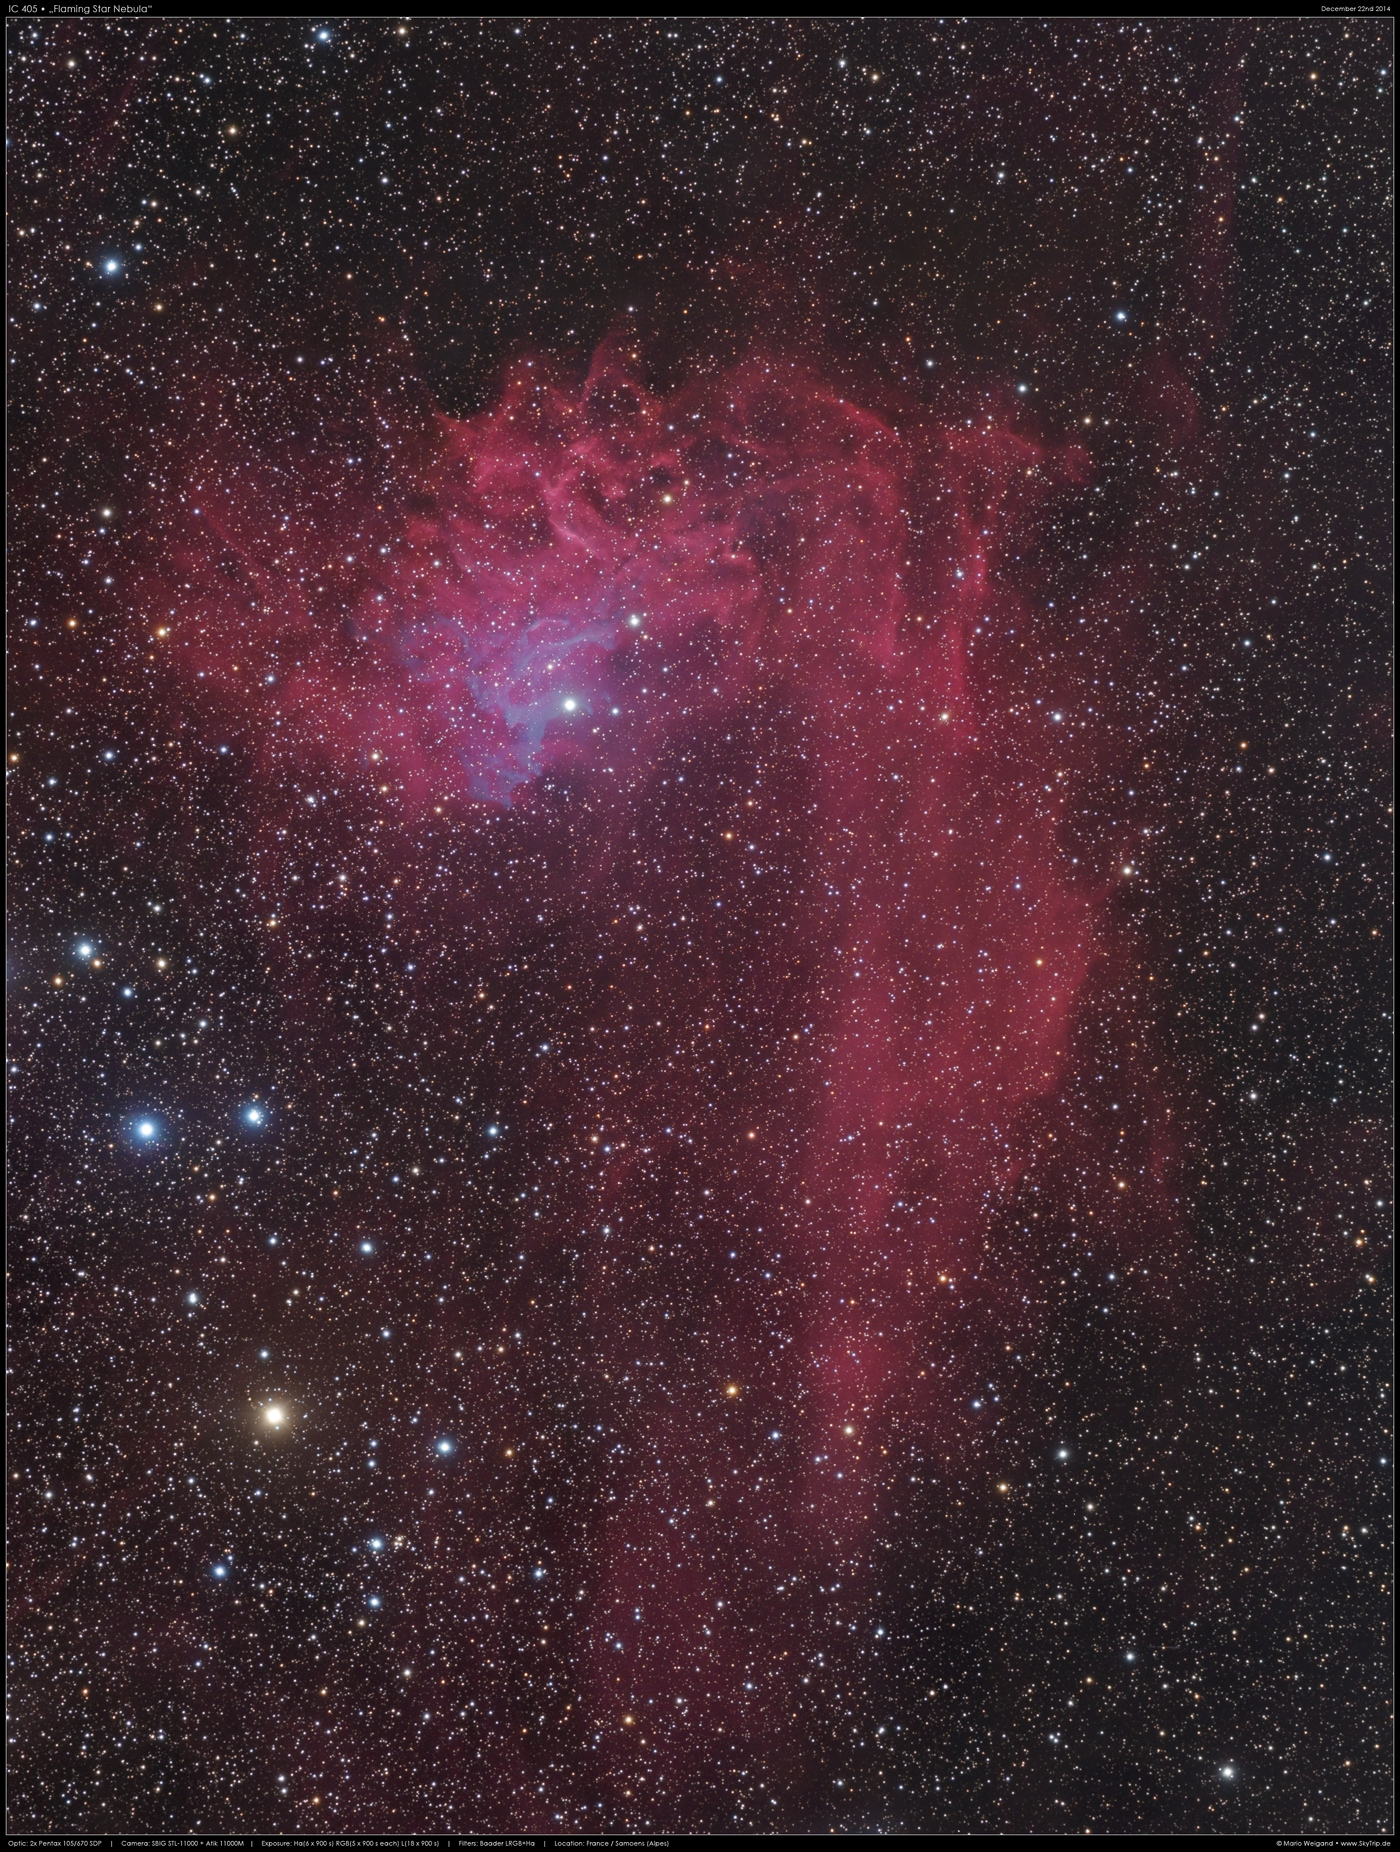 Flaming Star Nebel IC 405